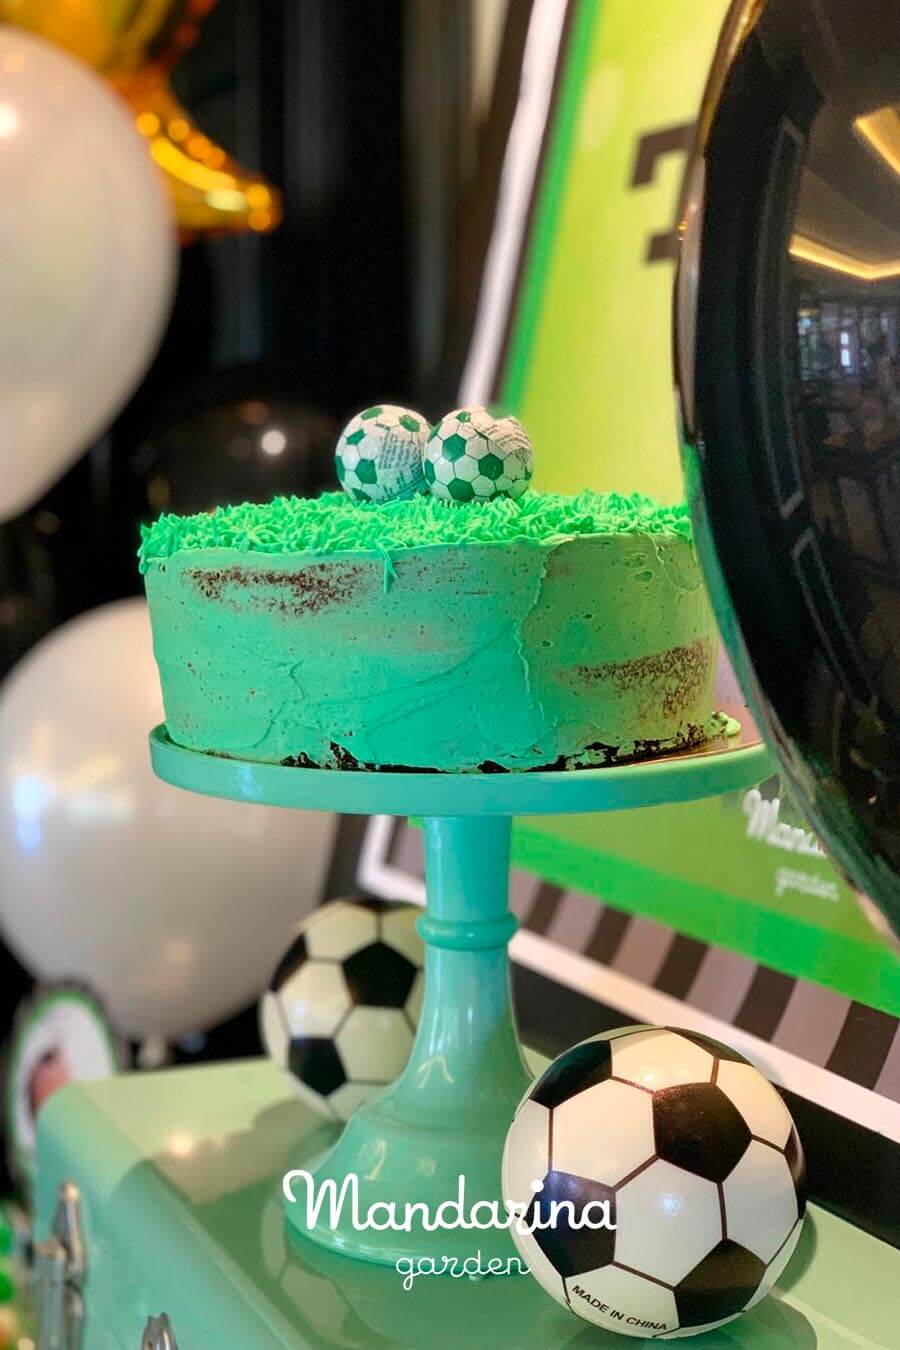 Homemade cake detail